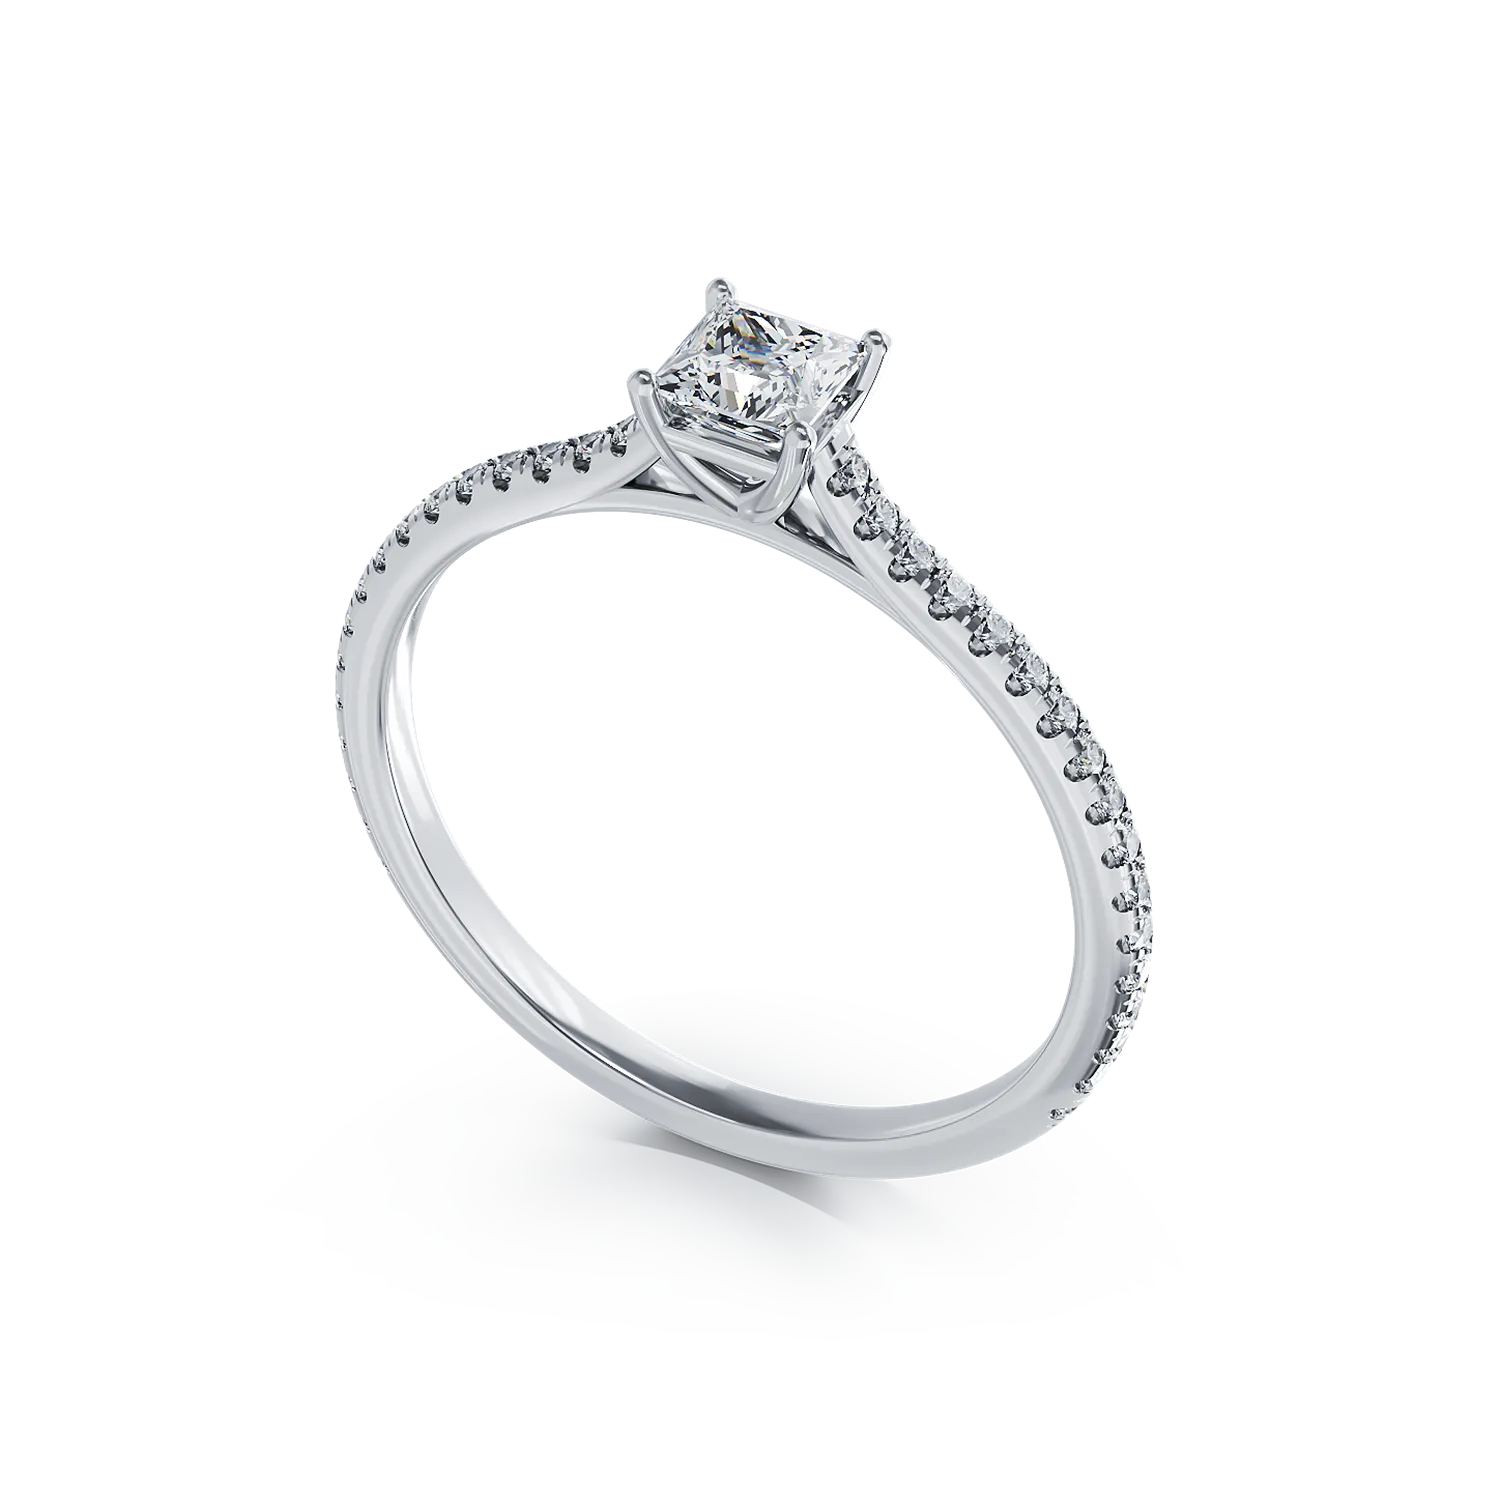 Platinum engagement ring with 0.325ct diamond and 0.165ct diamonds